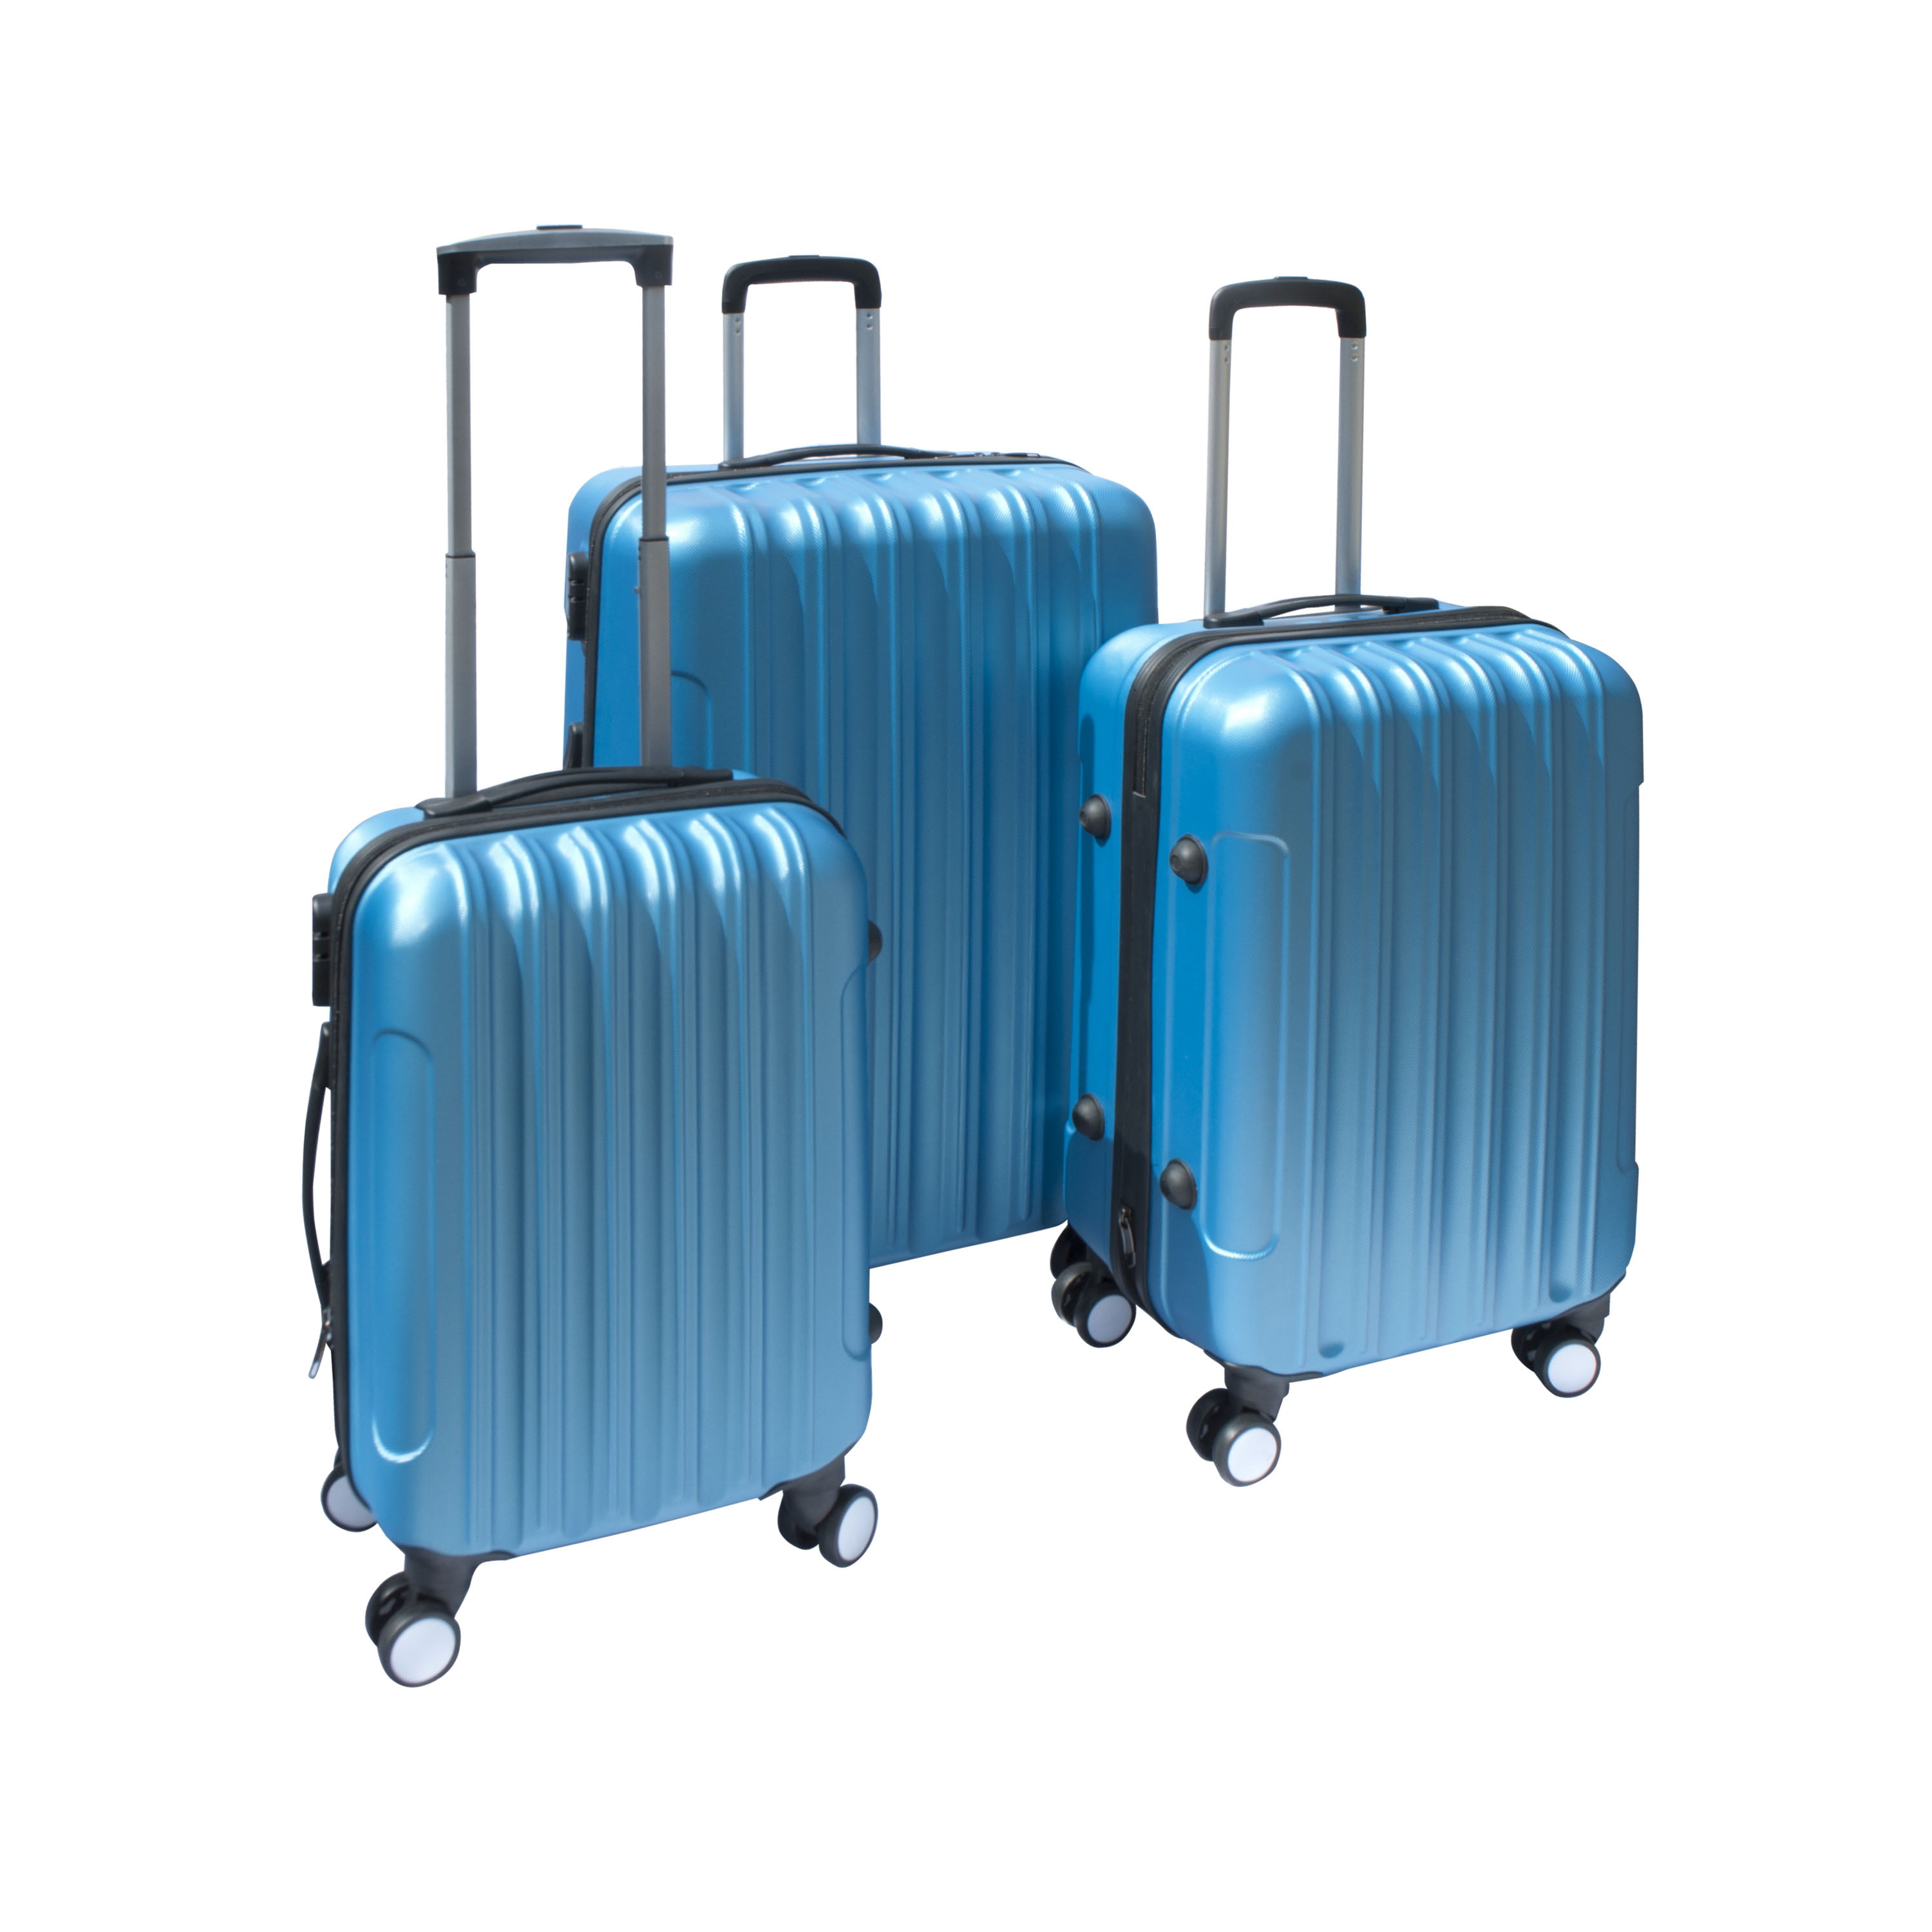 ALEKO ABS Hardside 3 Piece Luggage Set with Lock - Walmart.com